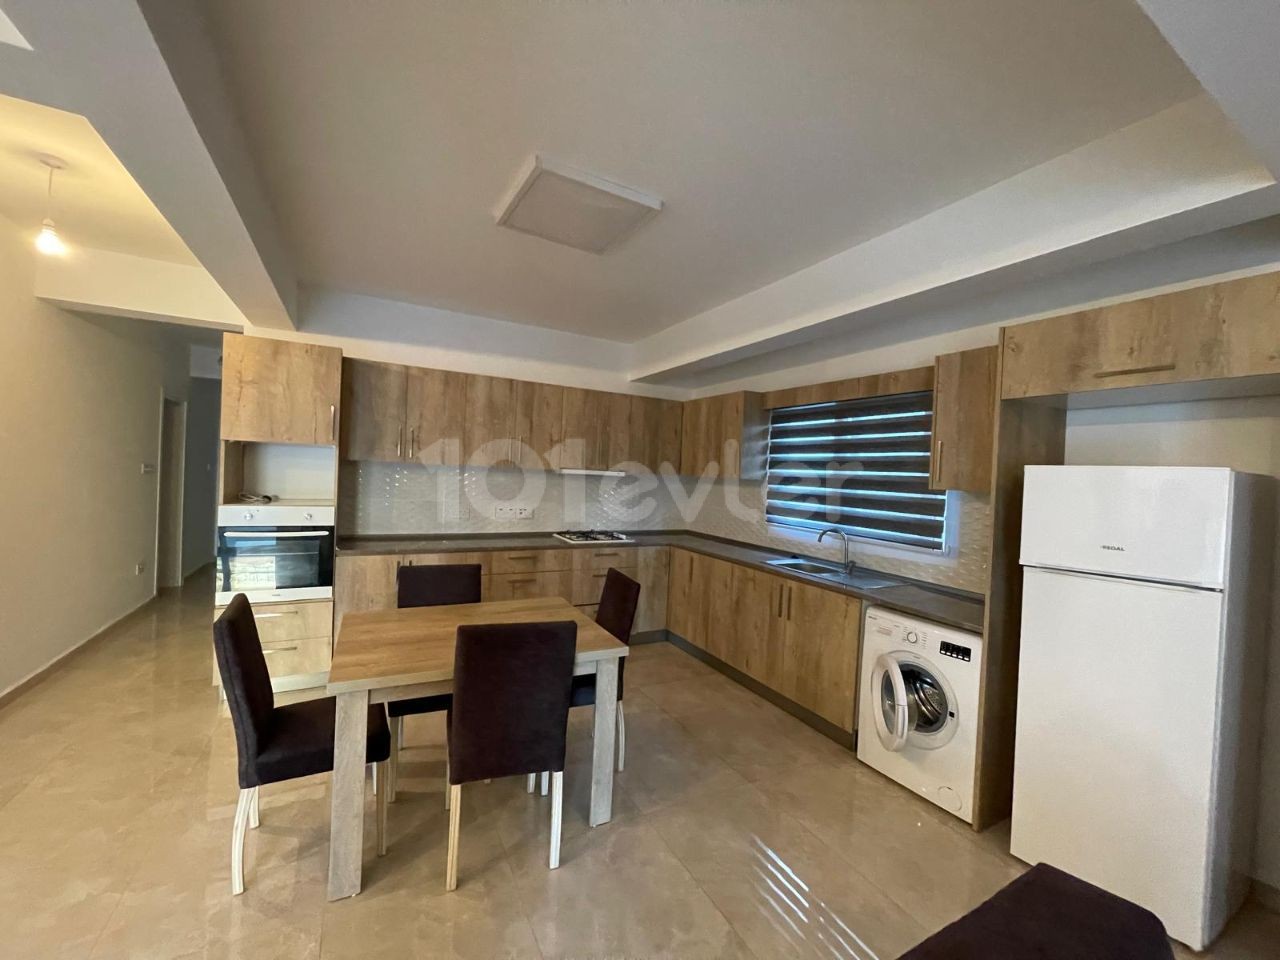 3+1 Flat for Rent in Famagusta Gülseren Area from Özkaraman